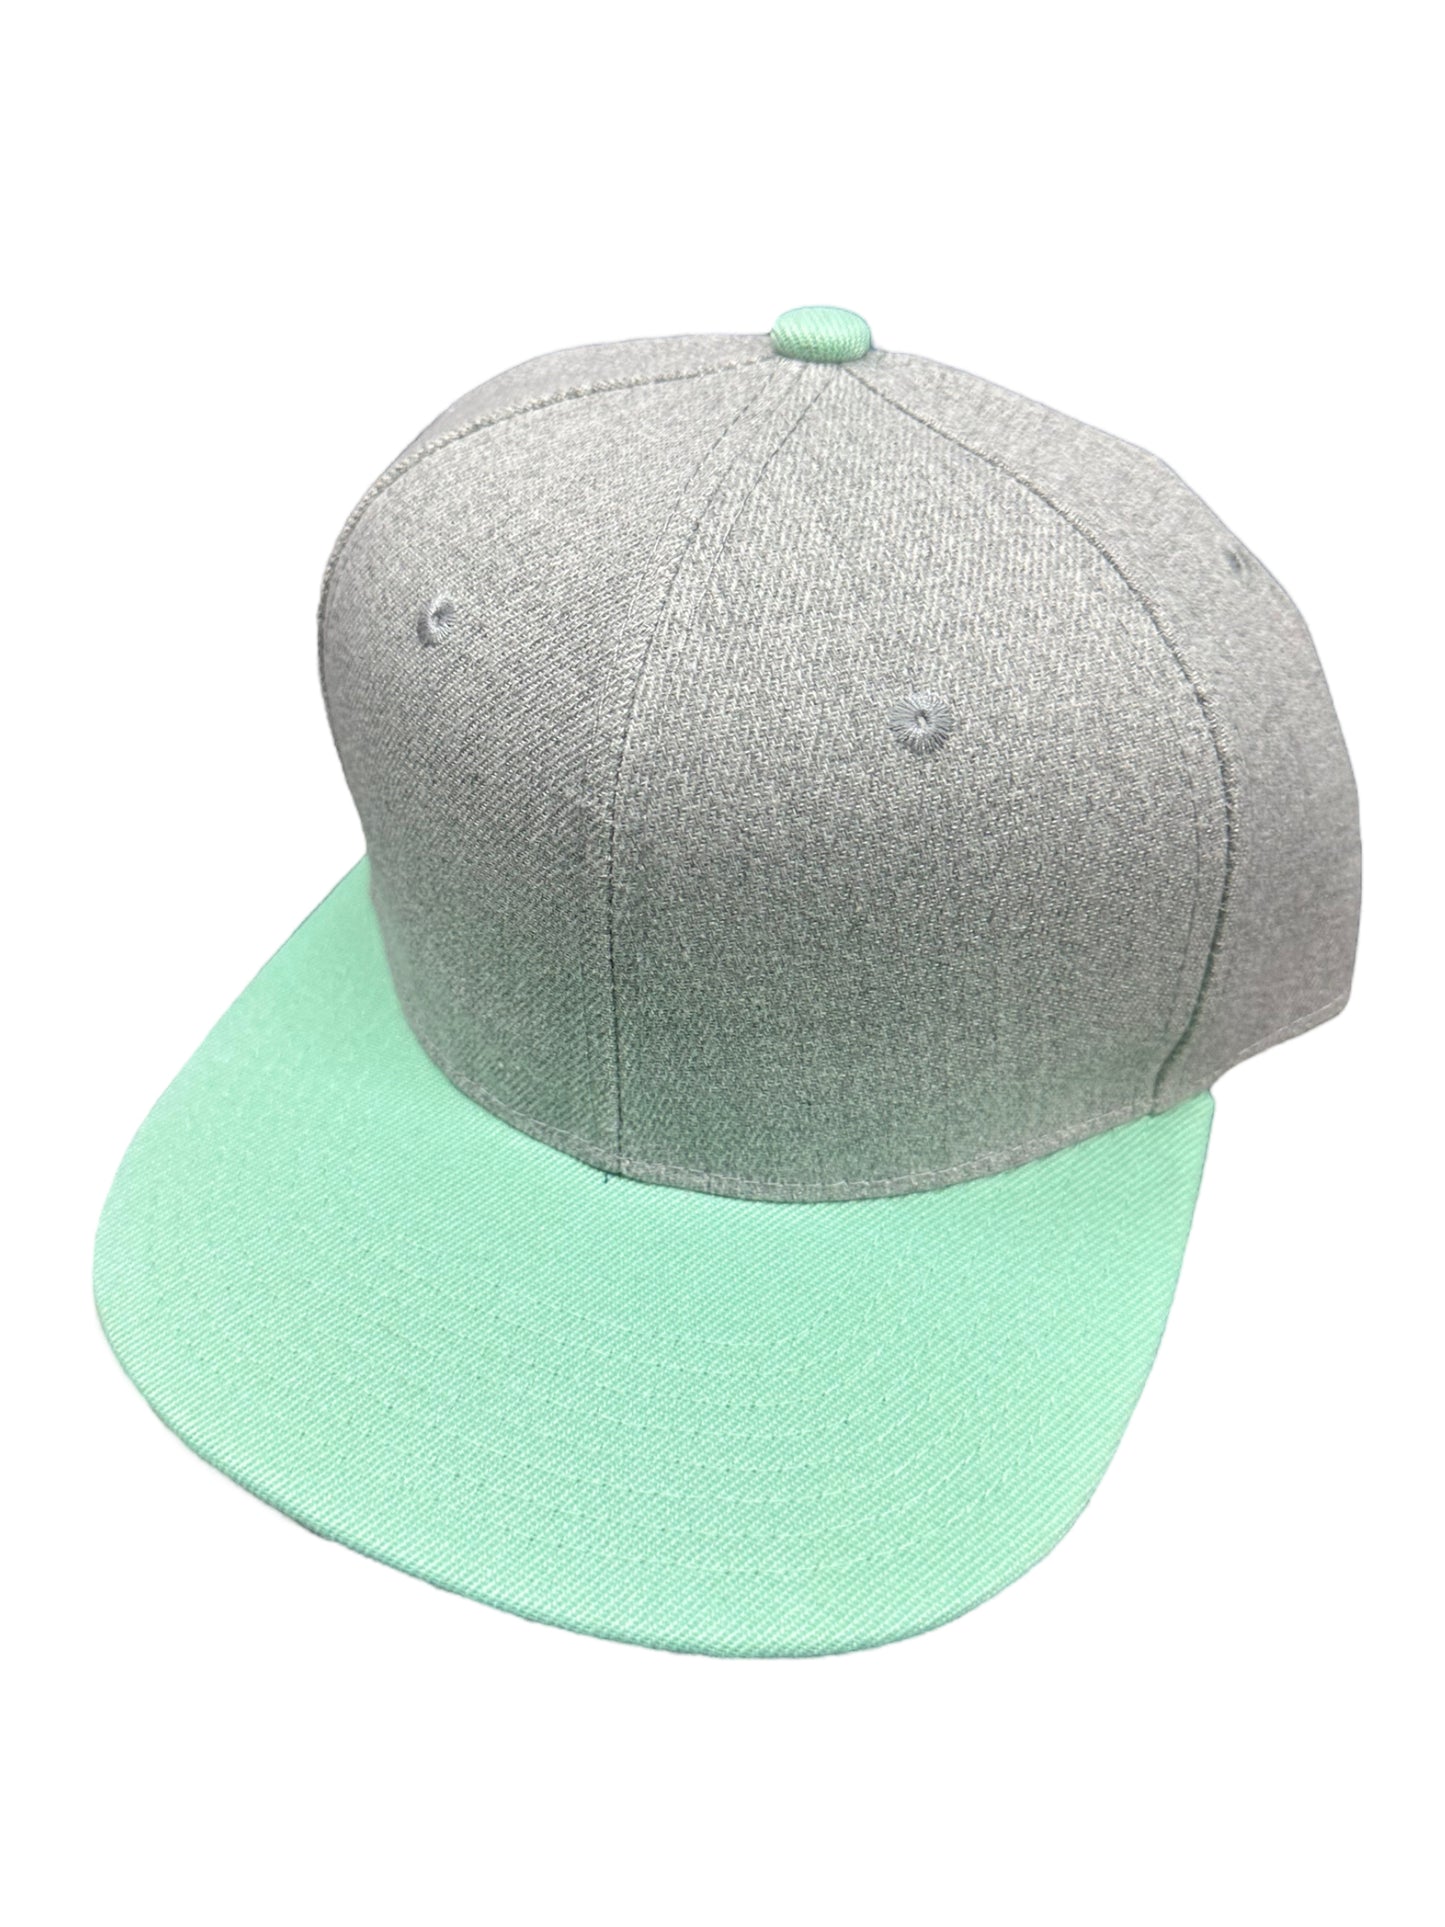 Mint & Light Grey SnapBack hat